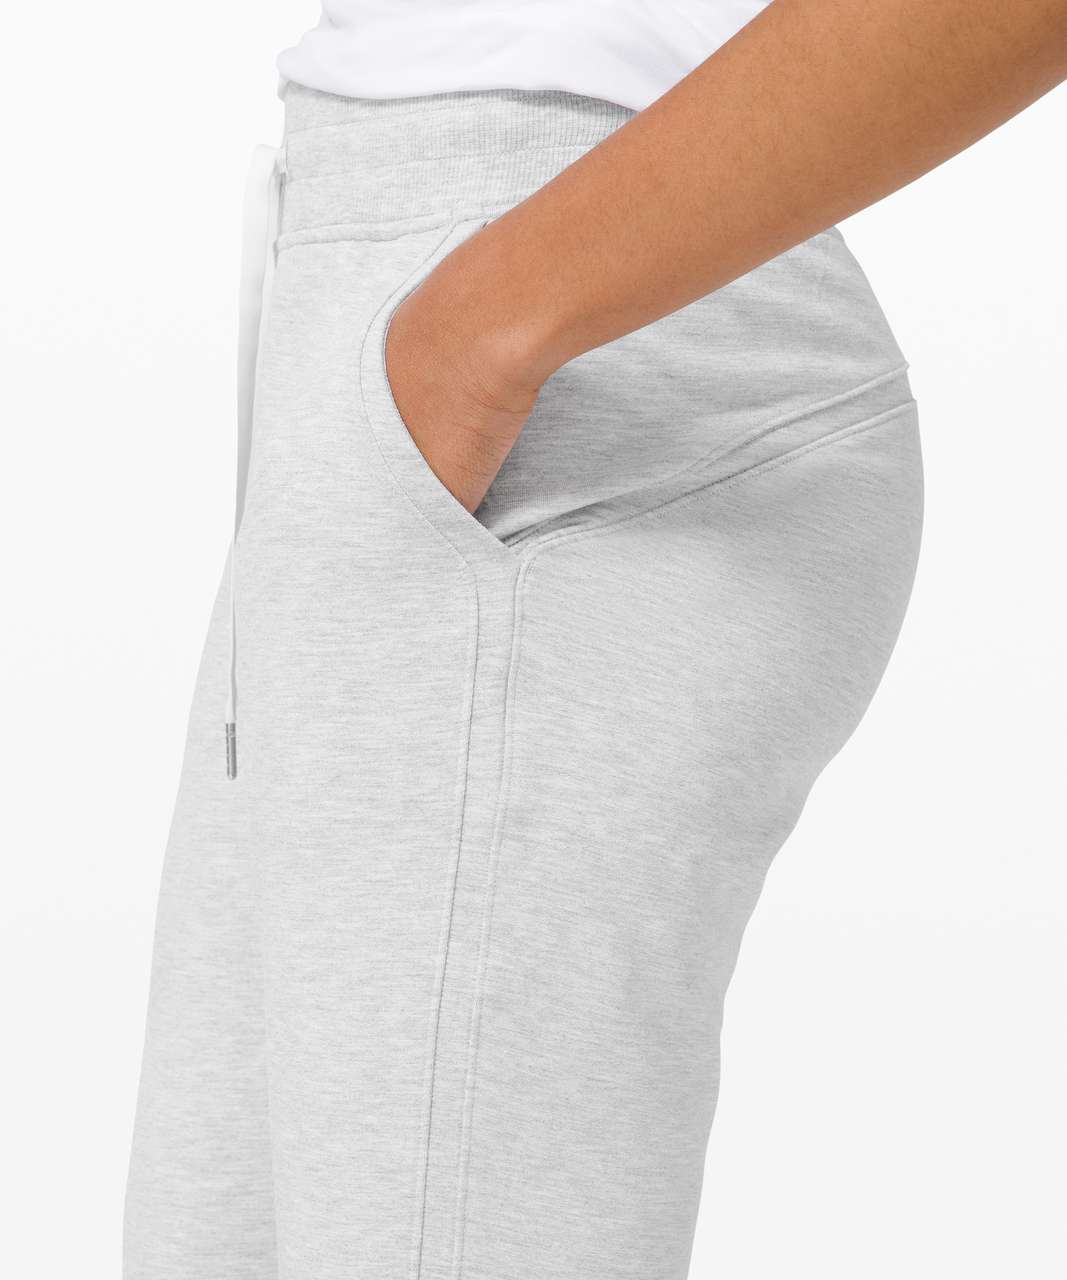 Lululemon Warm Down Jogger Soft Touch Heathered Gray Pants Women's Size: 12